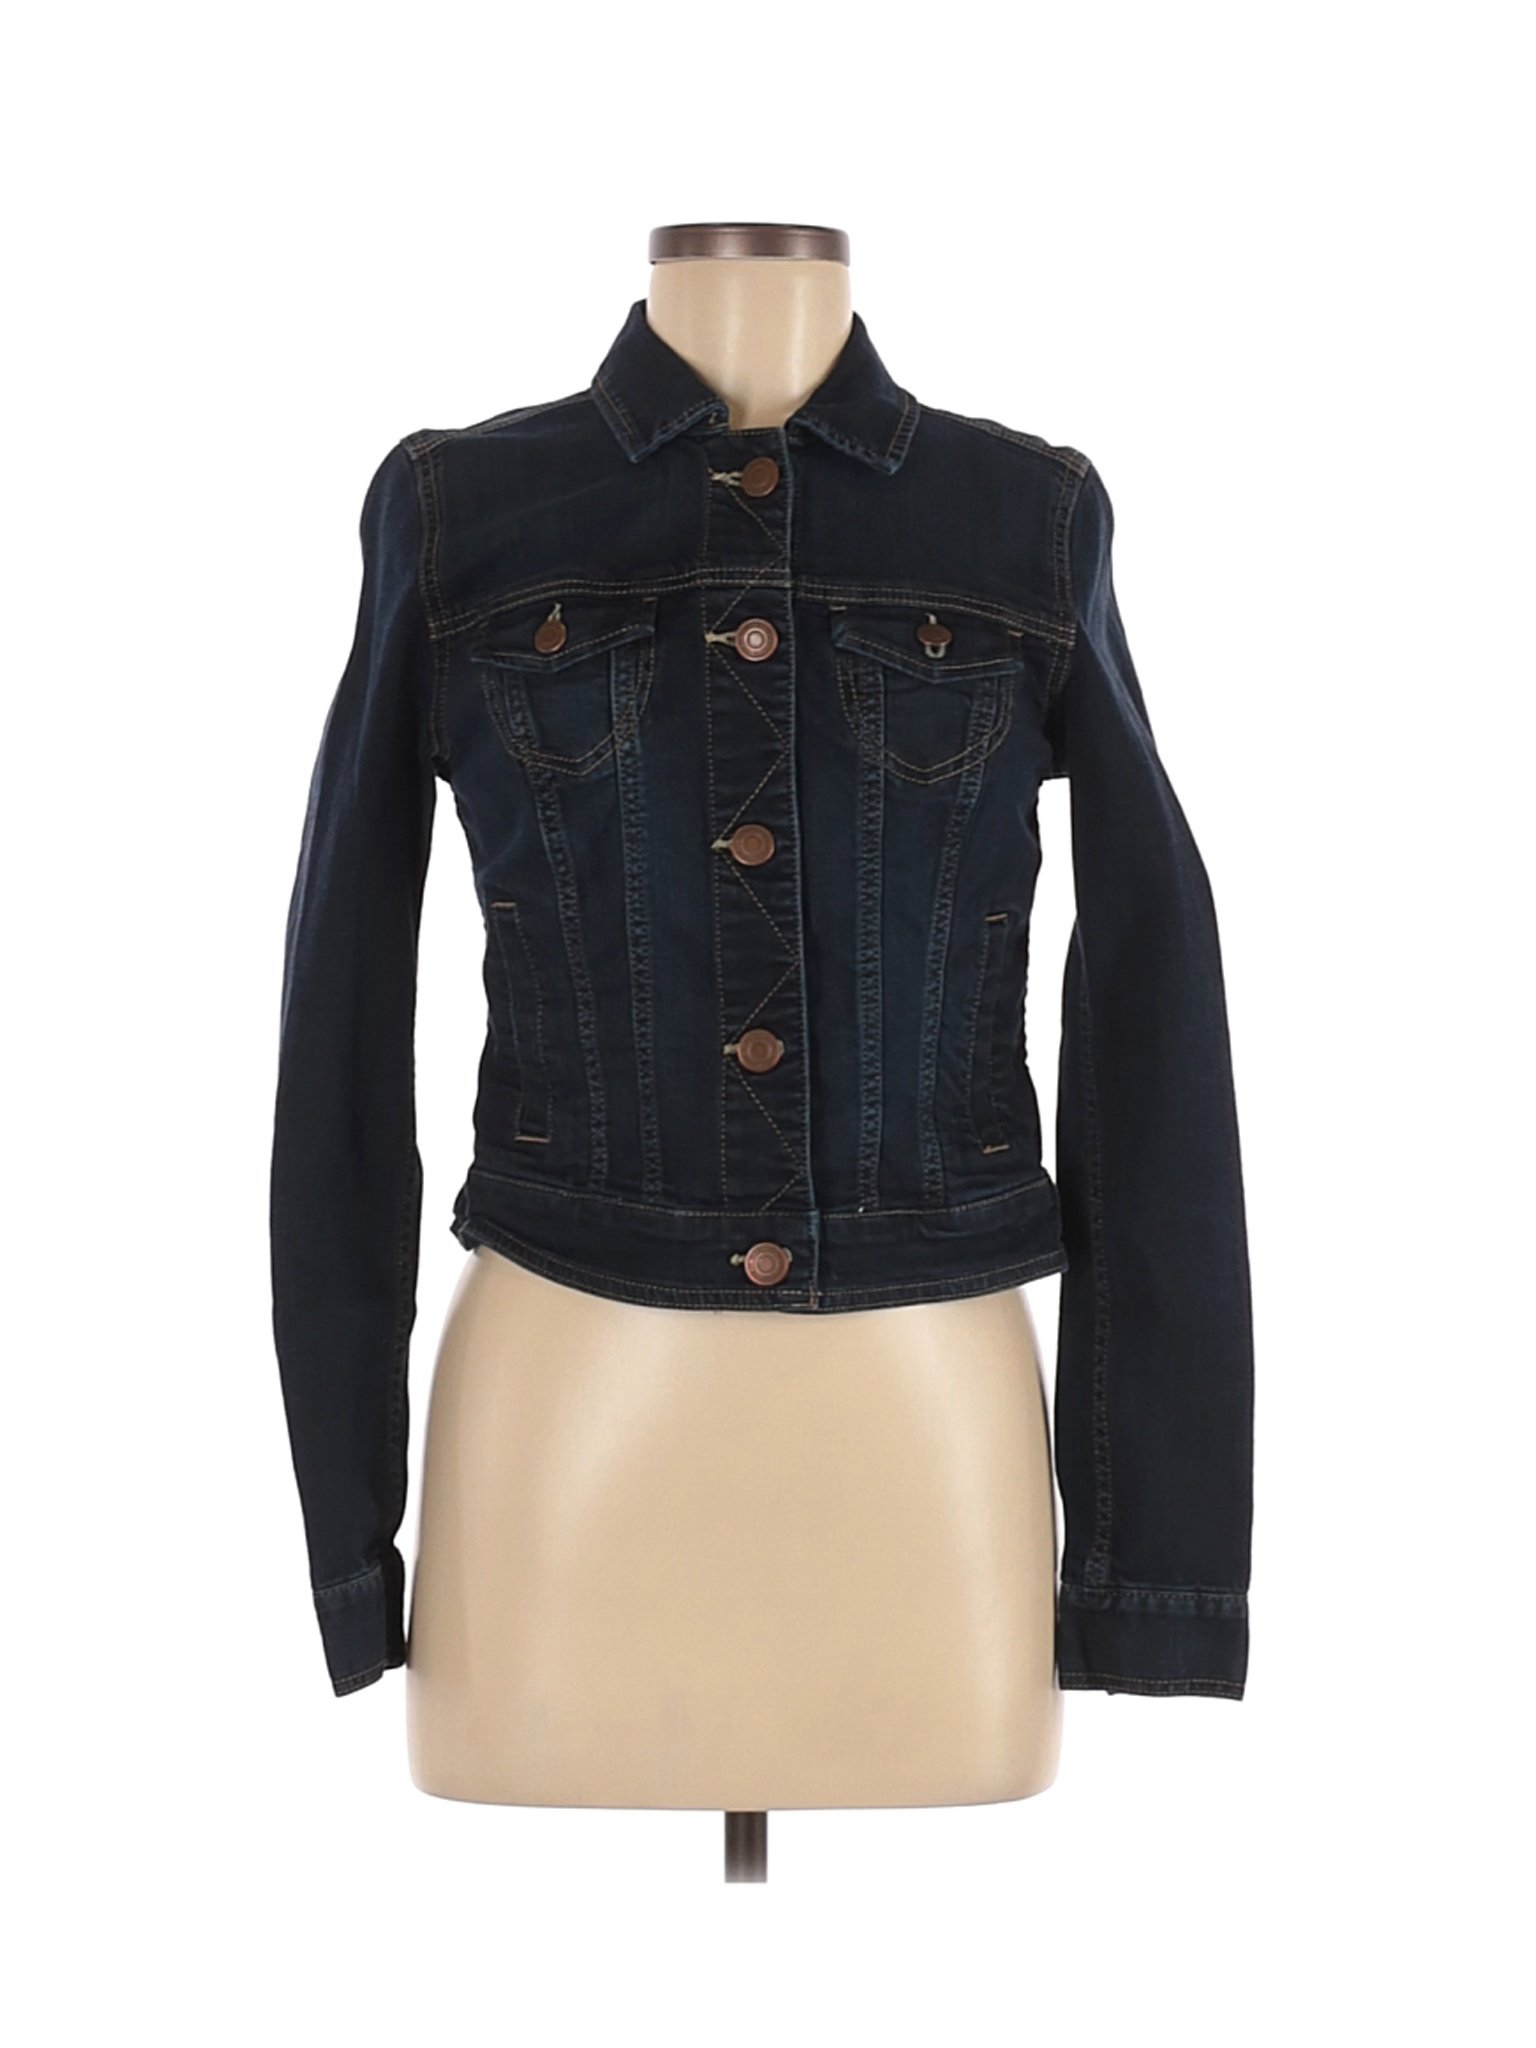 American Eagle Outfitters Women Black Denim Jacket M | eBay